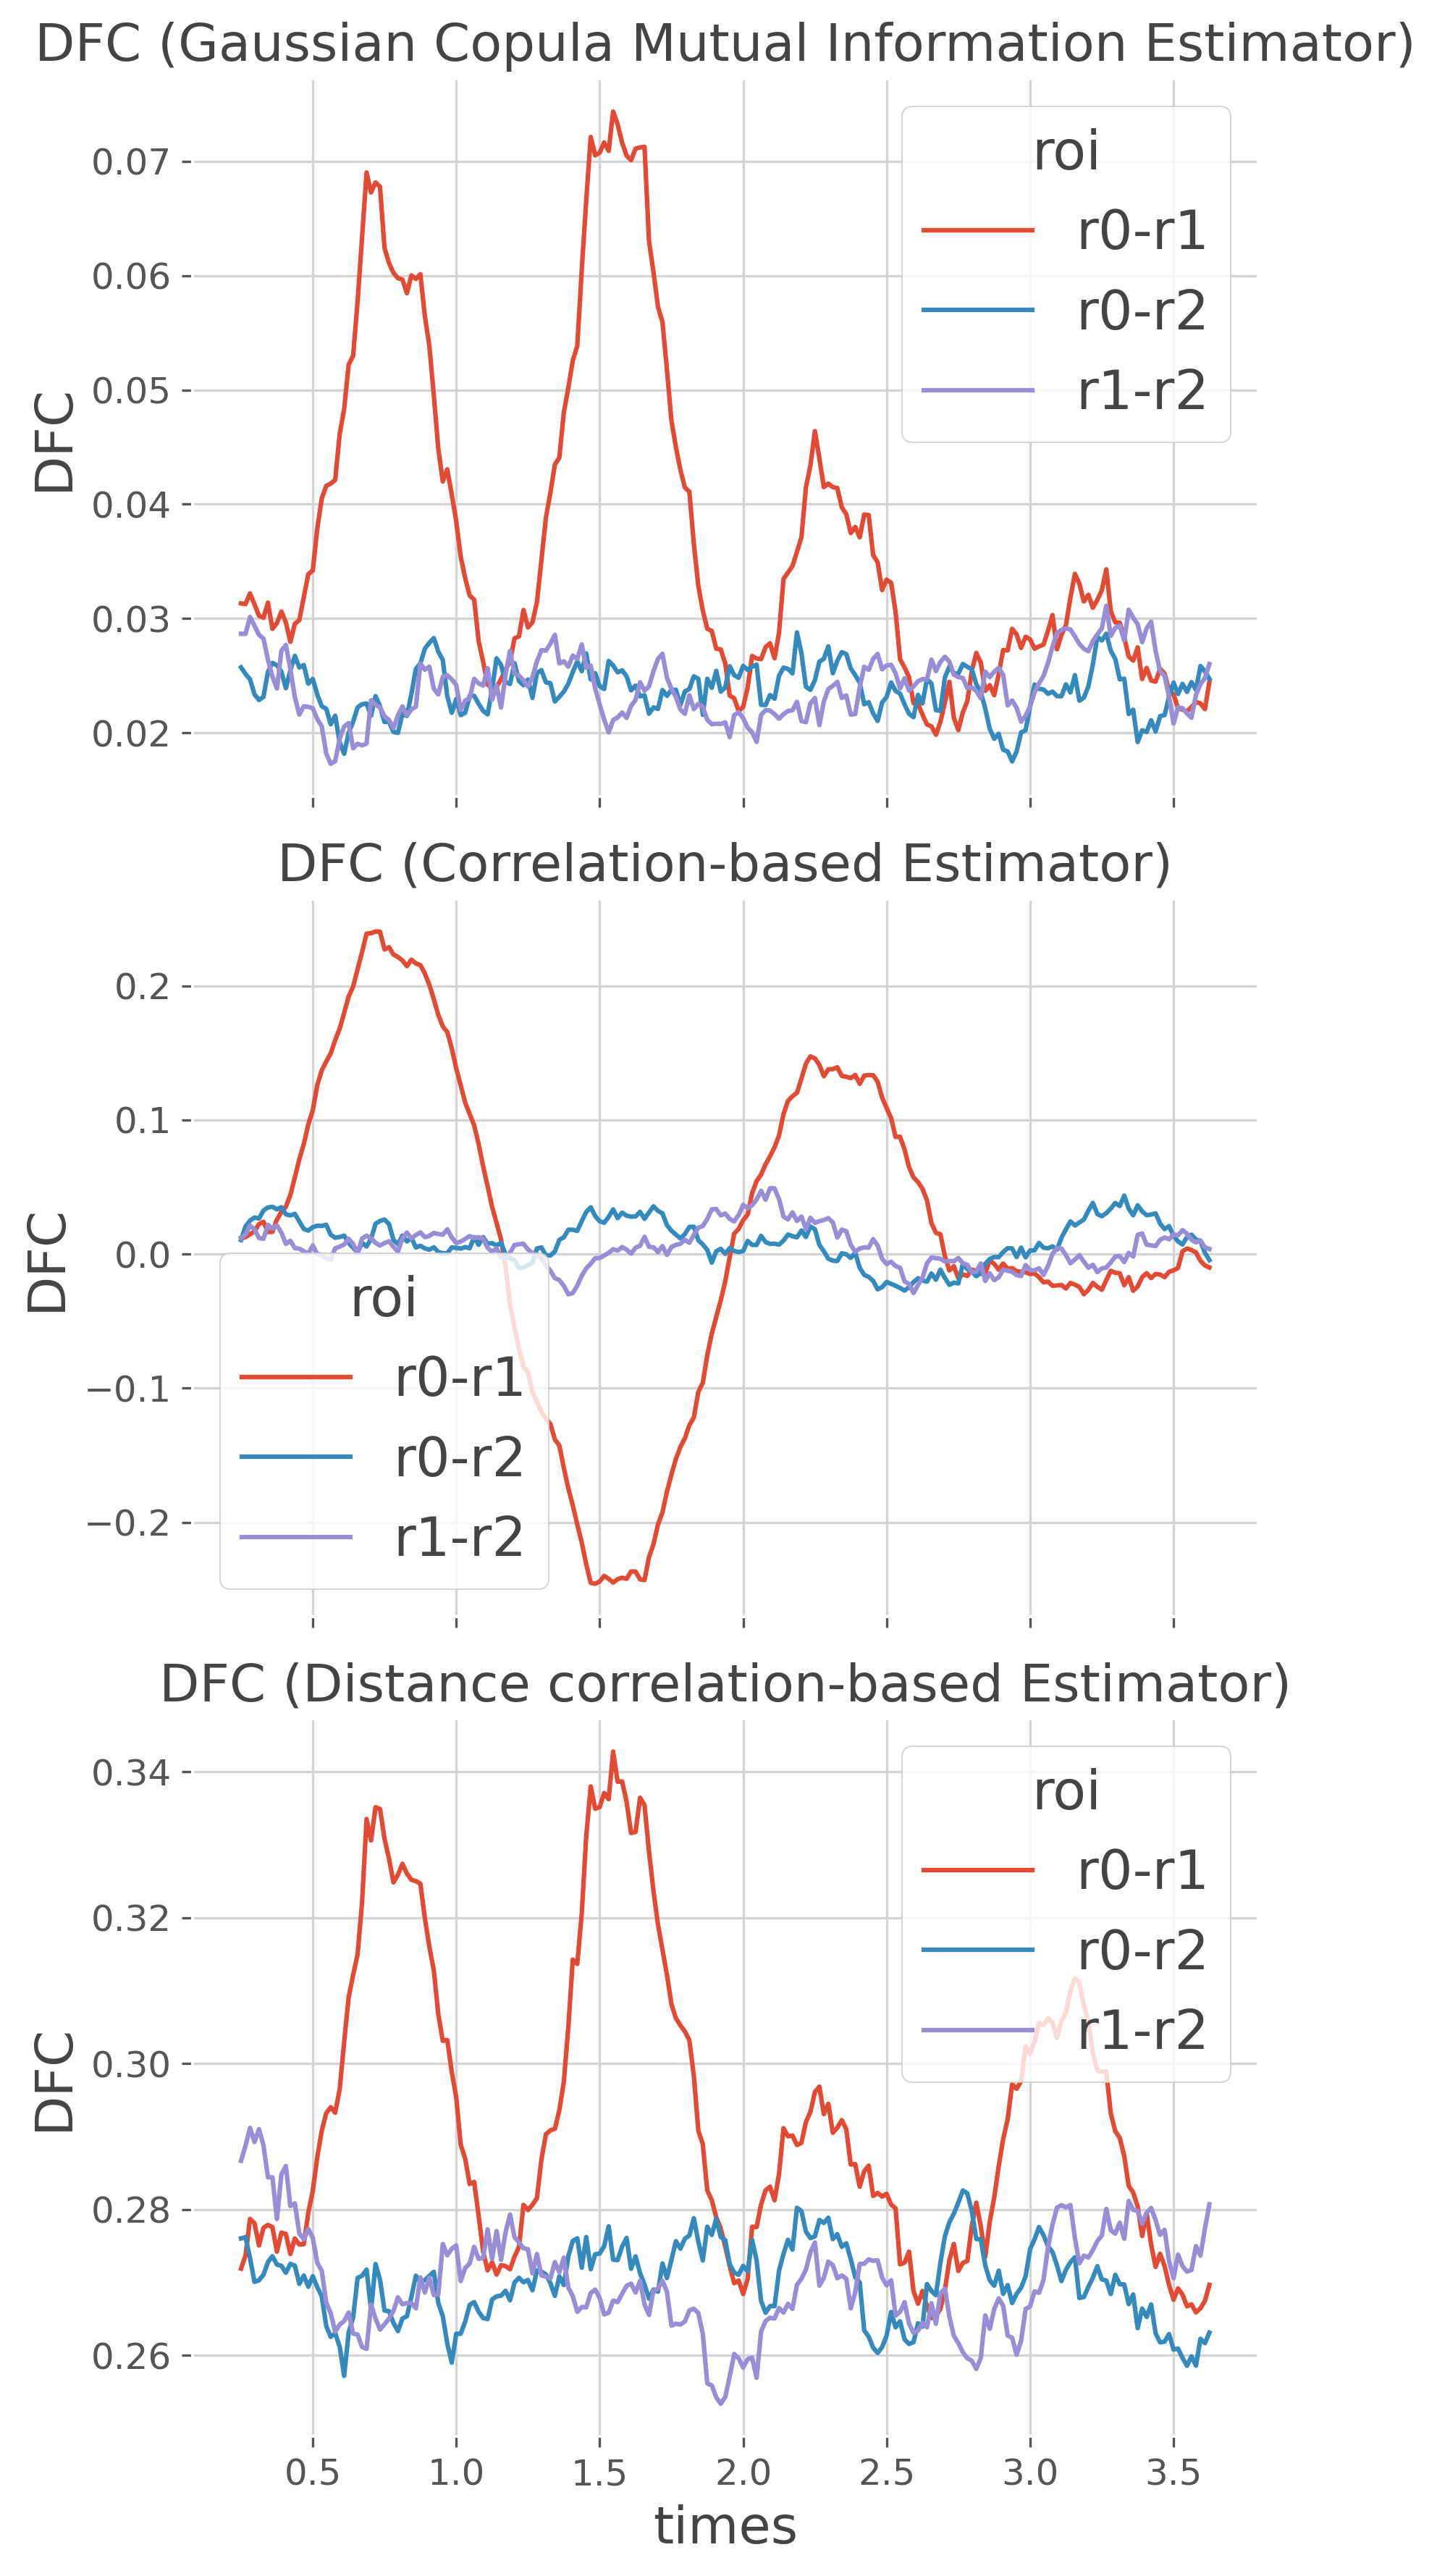 DFC (Gaussian Copula Mutual Information Estimator), DFC (Correlation-based Estimator), DFC (Distance correlation-based Estimator)